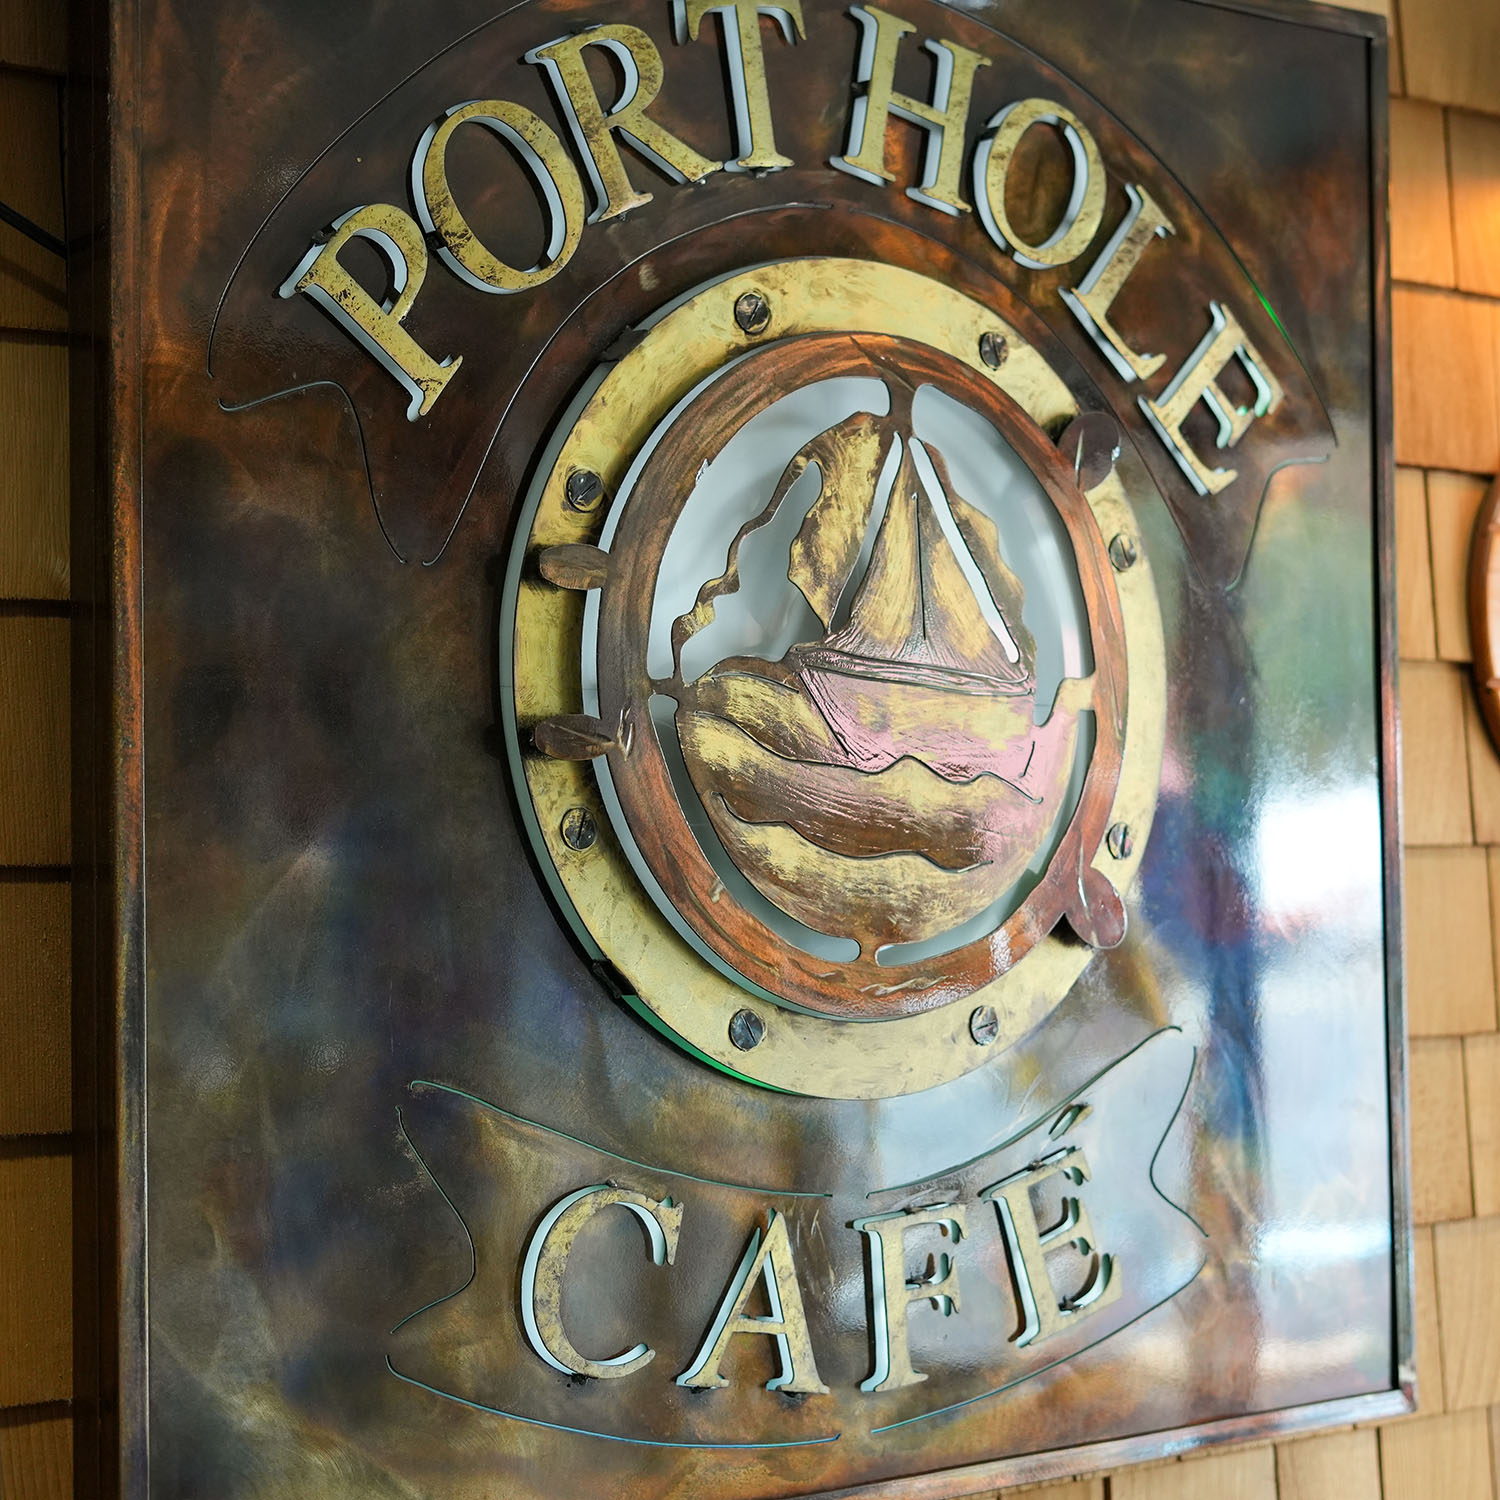 port-hole-cafe.jpg